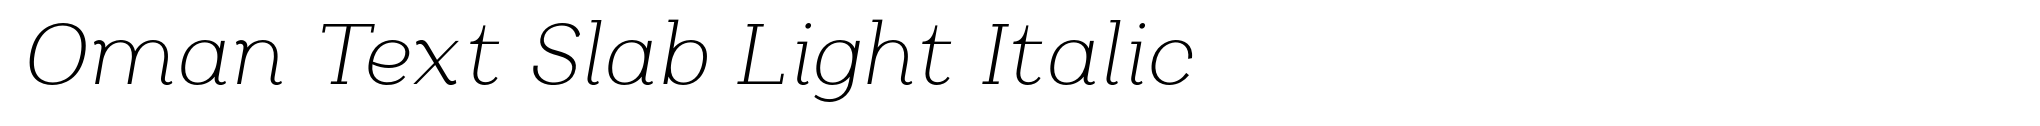 Oman Text Slab Light Italic image